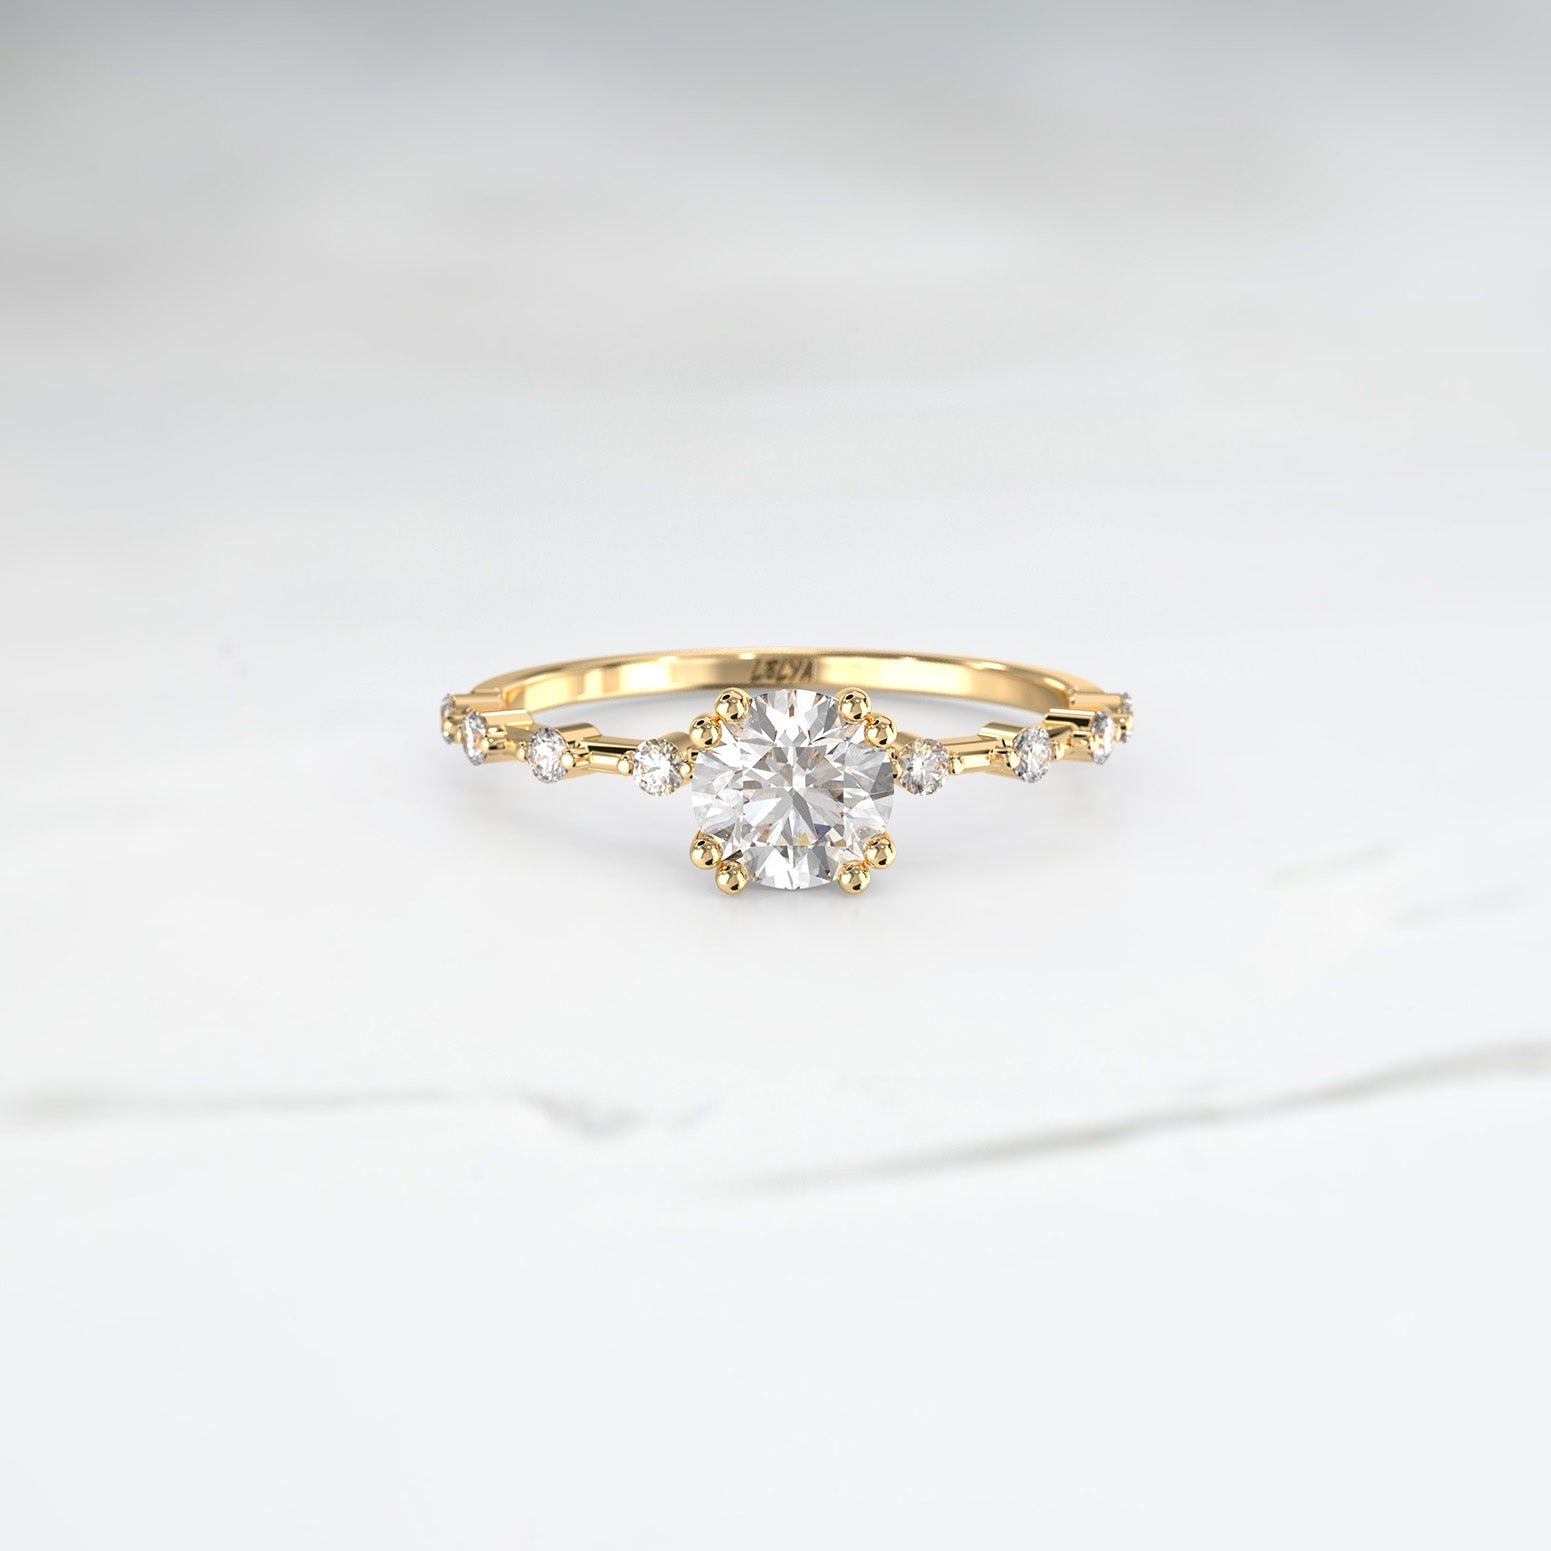 Diamond Polaris Ice Ring - Lelya - bespoke engagement and wedding rings made in Scotland, UK